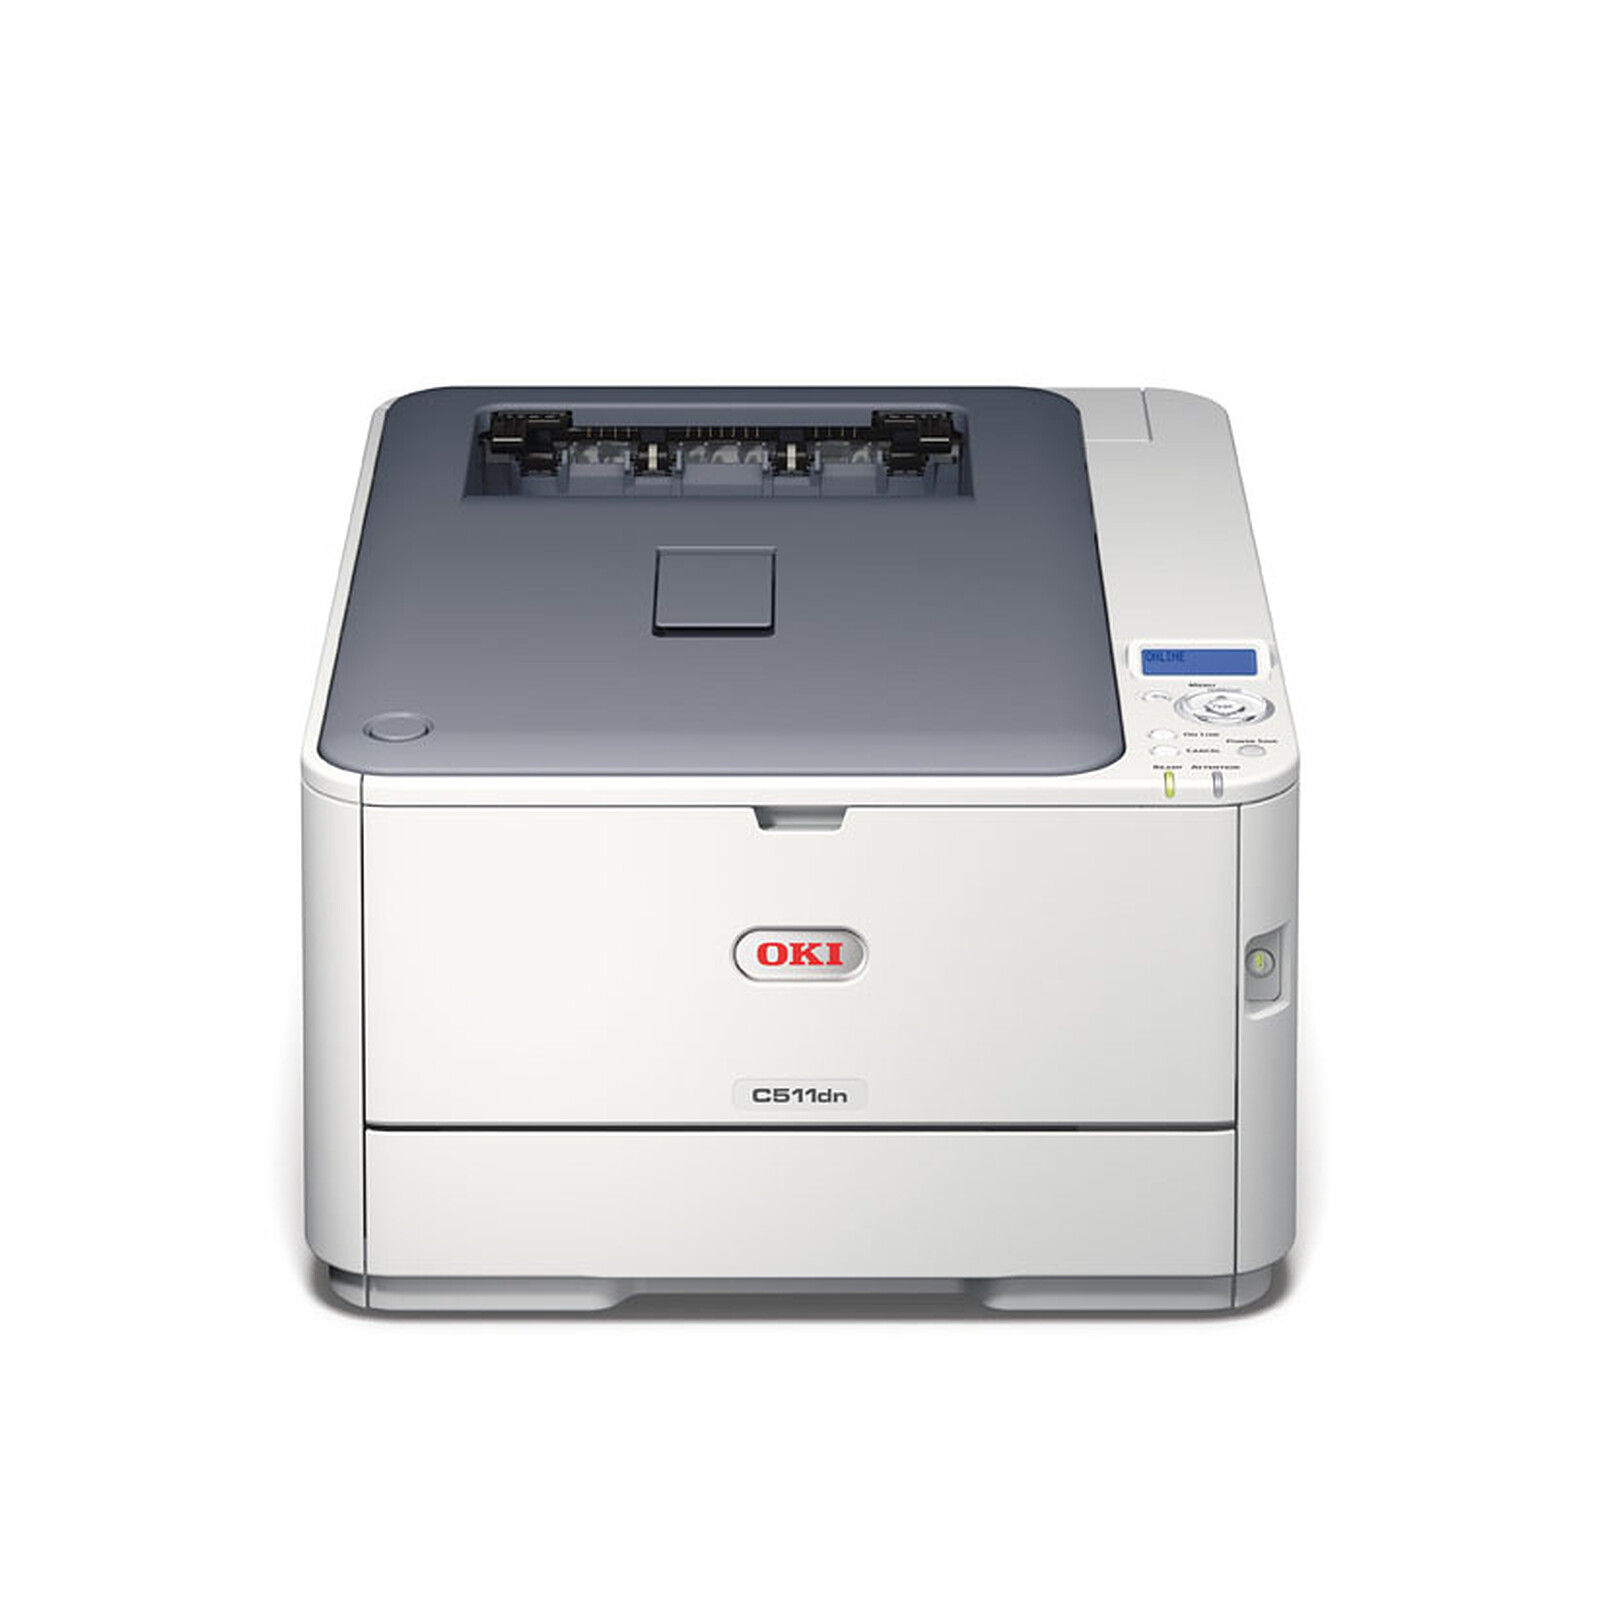 Oki C844dnw - Imprimante laser - Garantie 3 ans LDLC